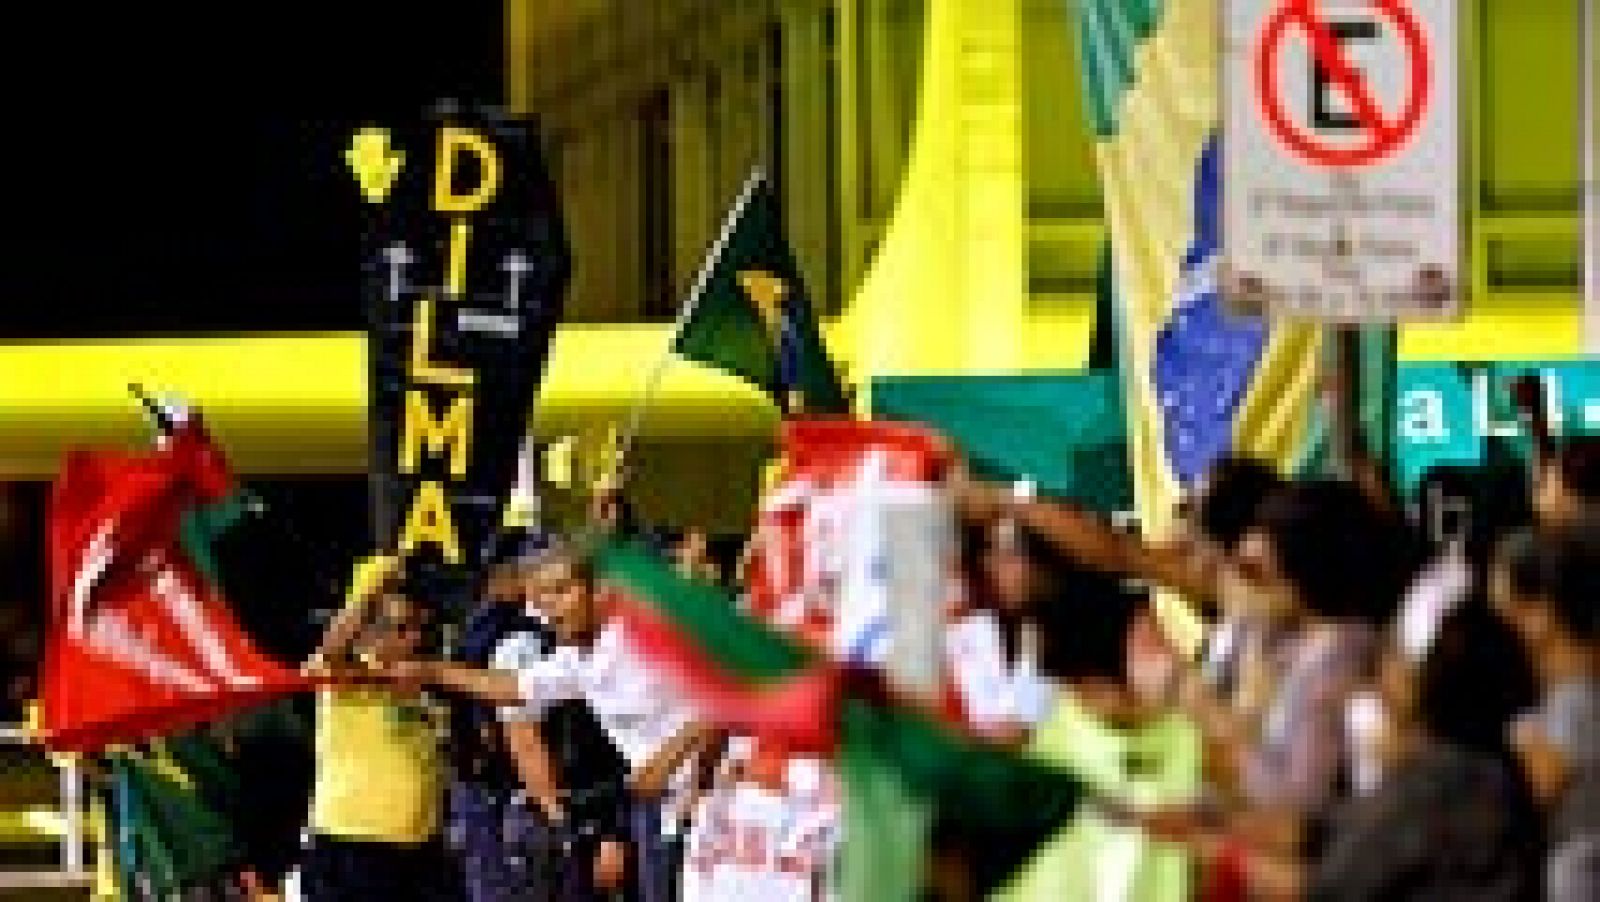 Telediario 1: El Senado vota si aparta a Dilma Rousseff, mientras Brasil se desgarra en las calles | RTVE Play